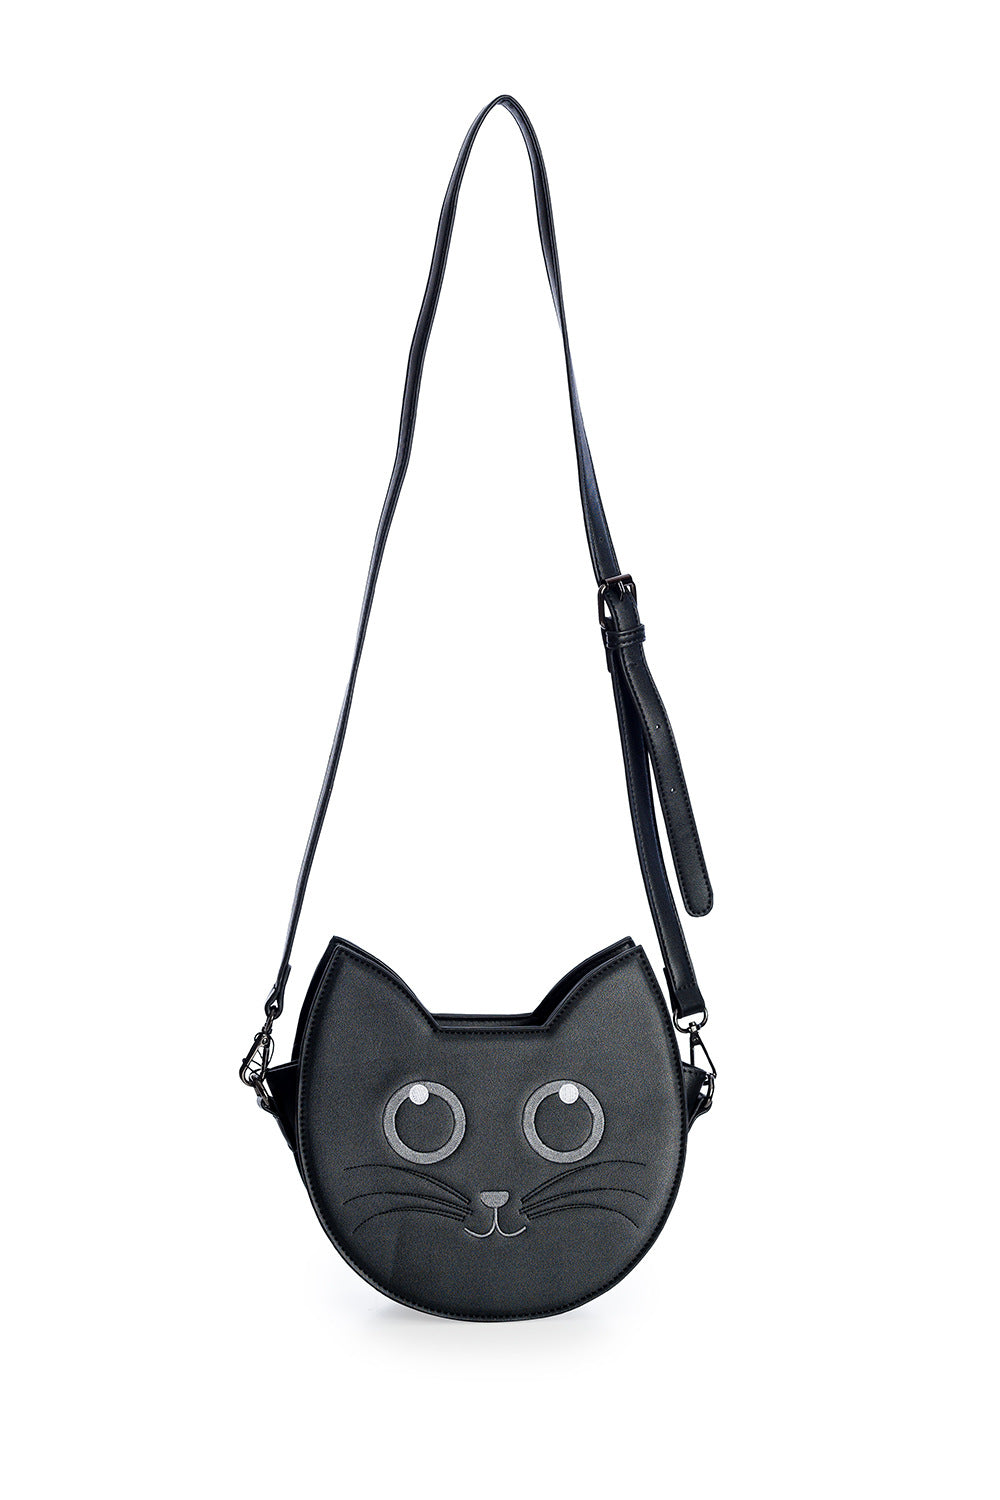 Lost Queen Women's Wendigo Shoulder Bag Cute Black Cat Bat Crossbody Purse